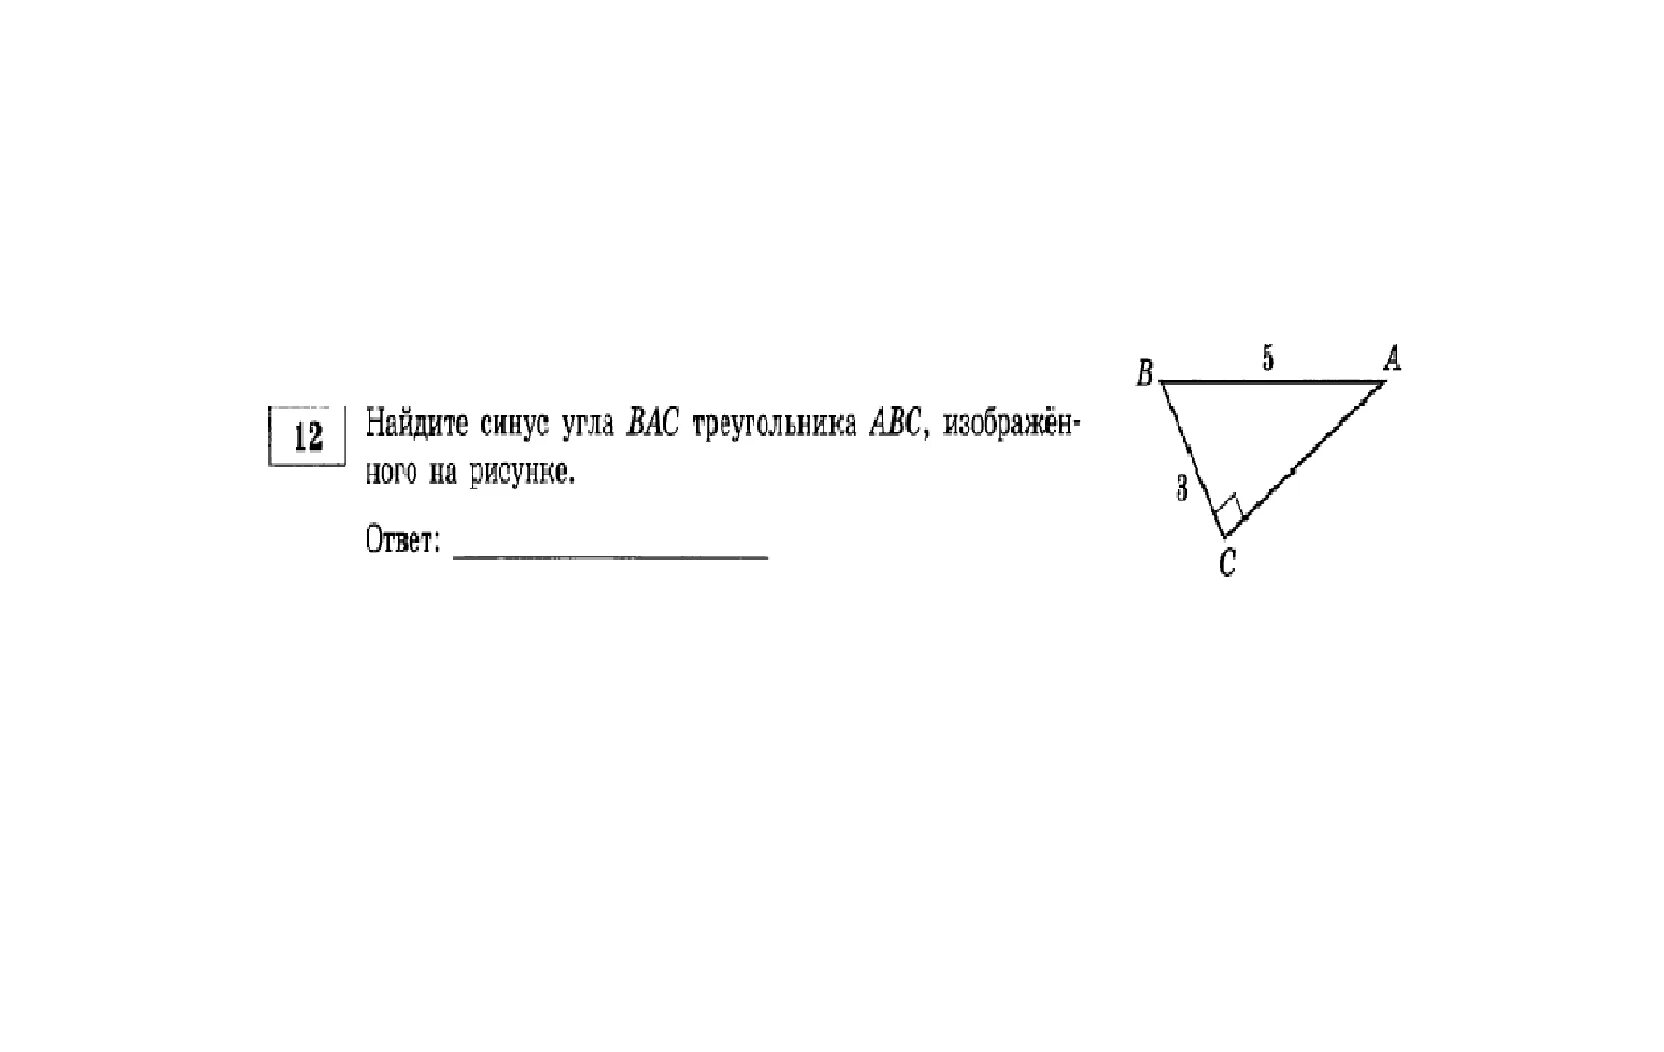 Найдите синус угла Bac. Найдиое синус УГЛАBAC треугольника ABC изображонного на ресунке. Найдите синус угла Bac изображенного на рисунке. Найдите синус угла Bac треугольника ABC.